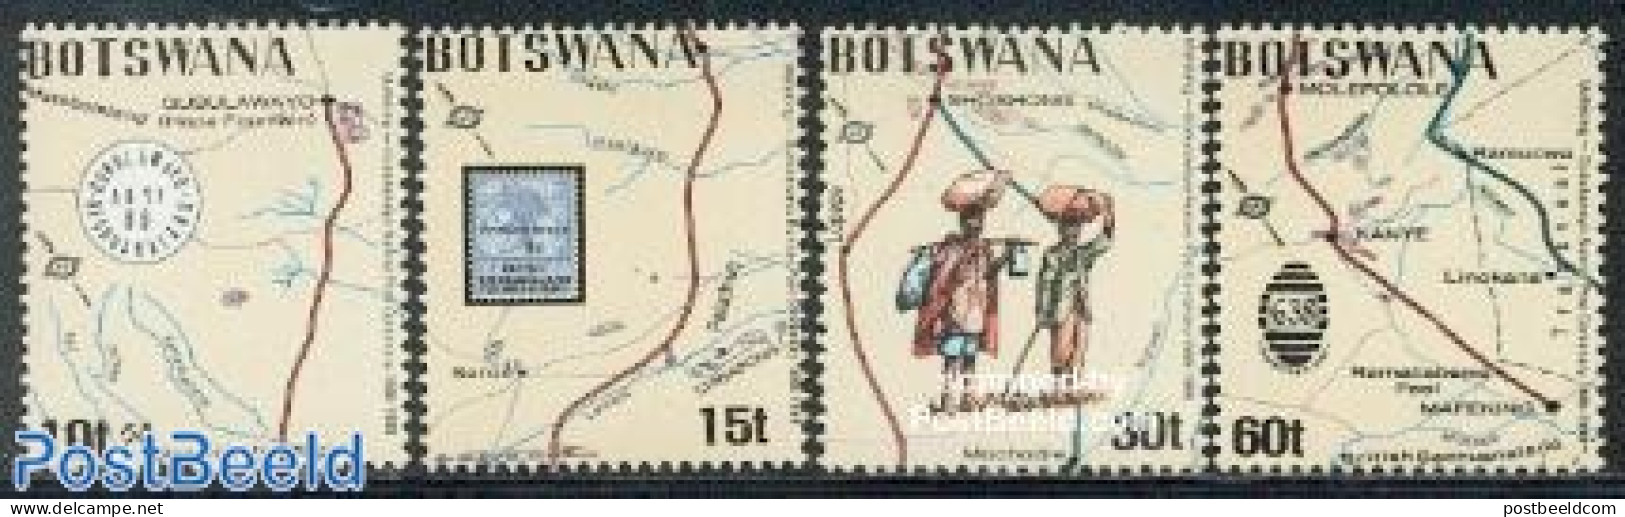 Botswana 1988 Postal Line 4v, Mint NH, Various - Post - Stamps On Stamps - Maps - Poste